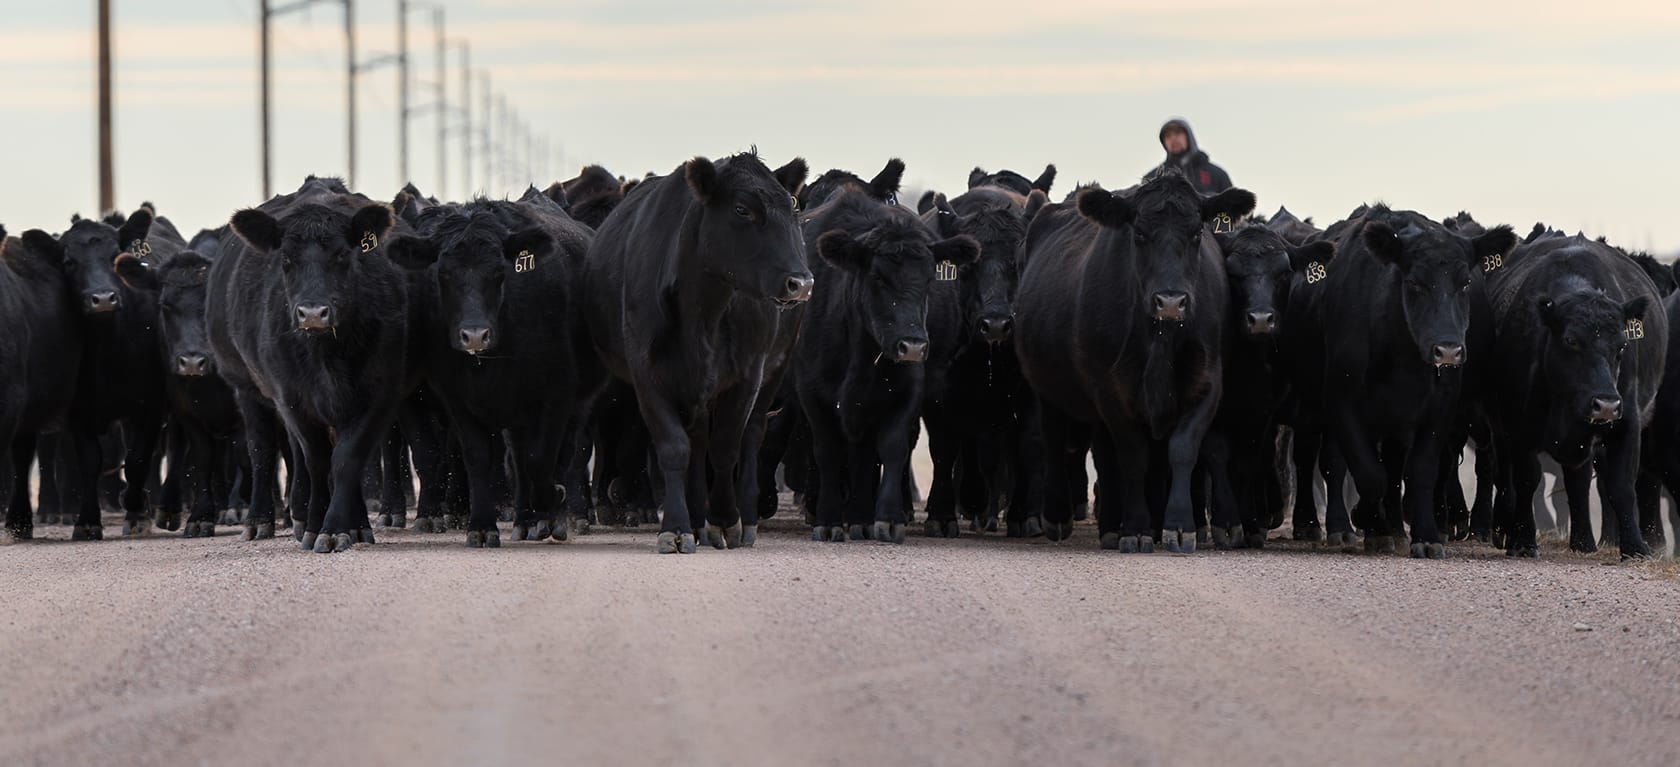 cows walking on gravel road